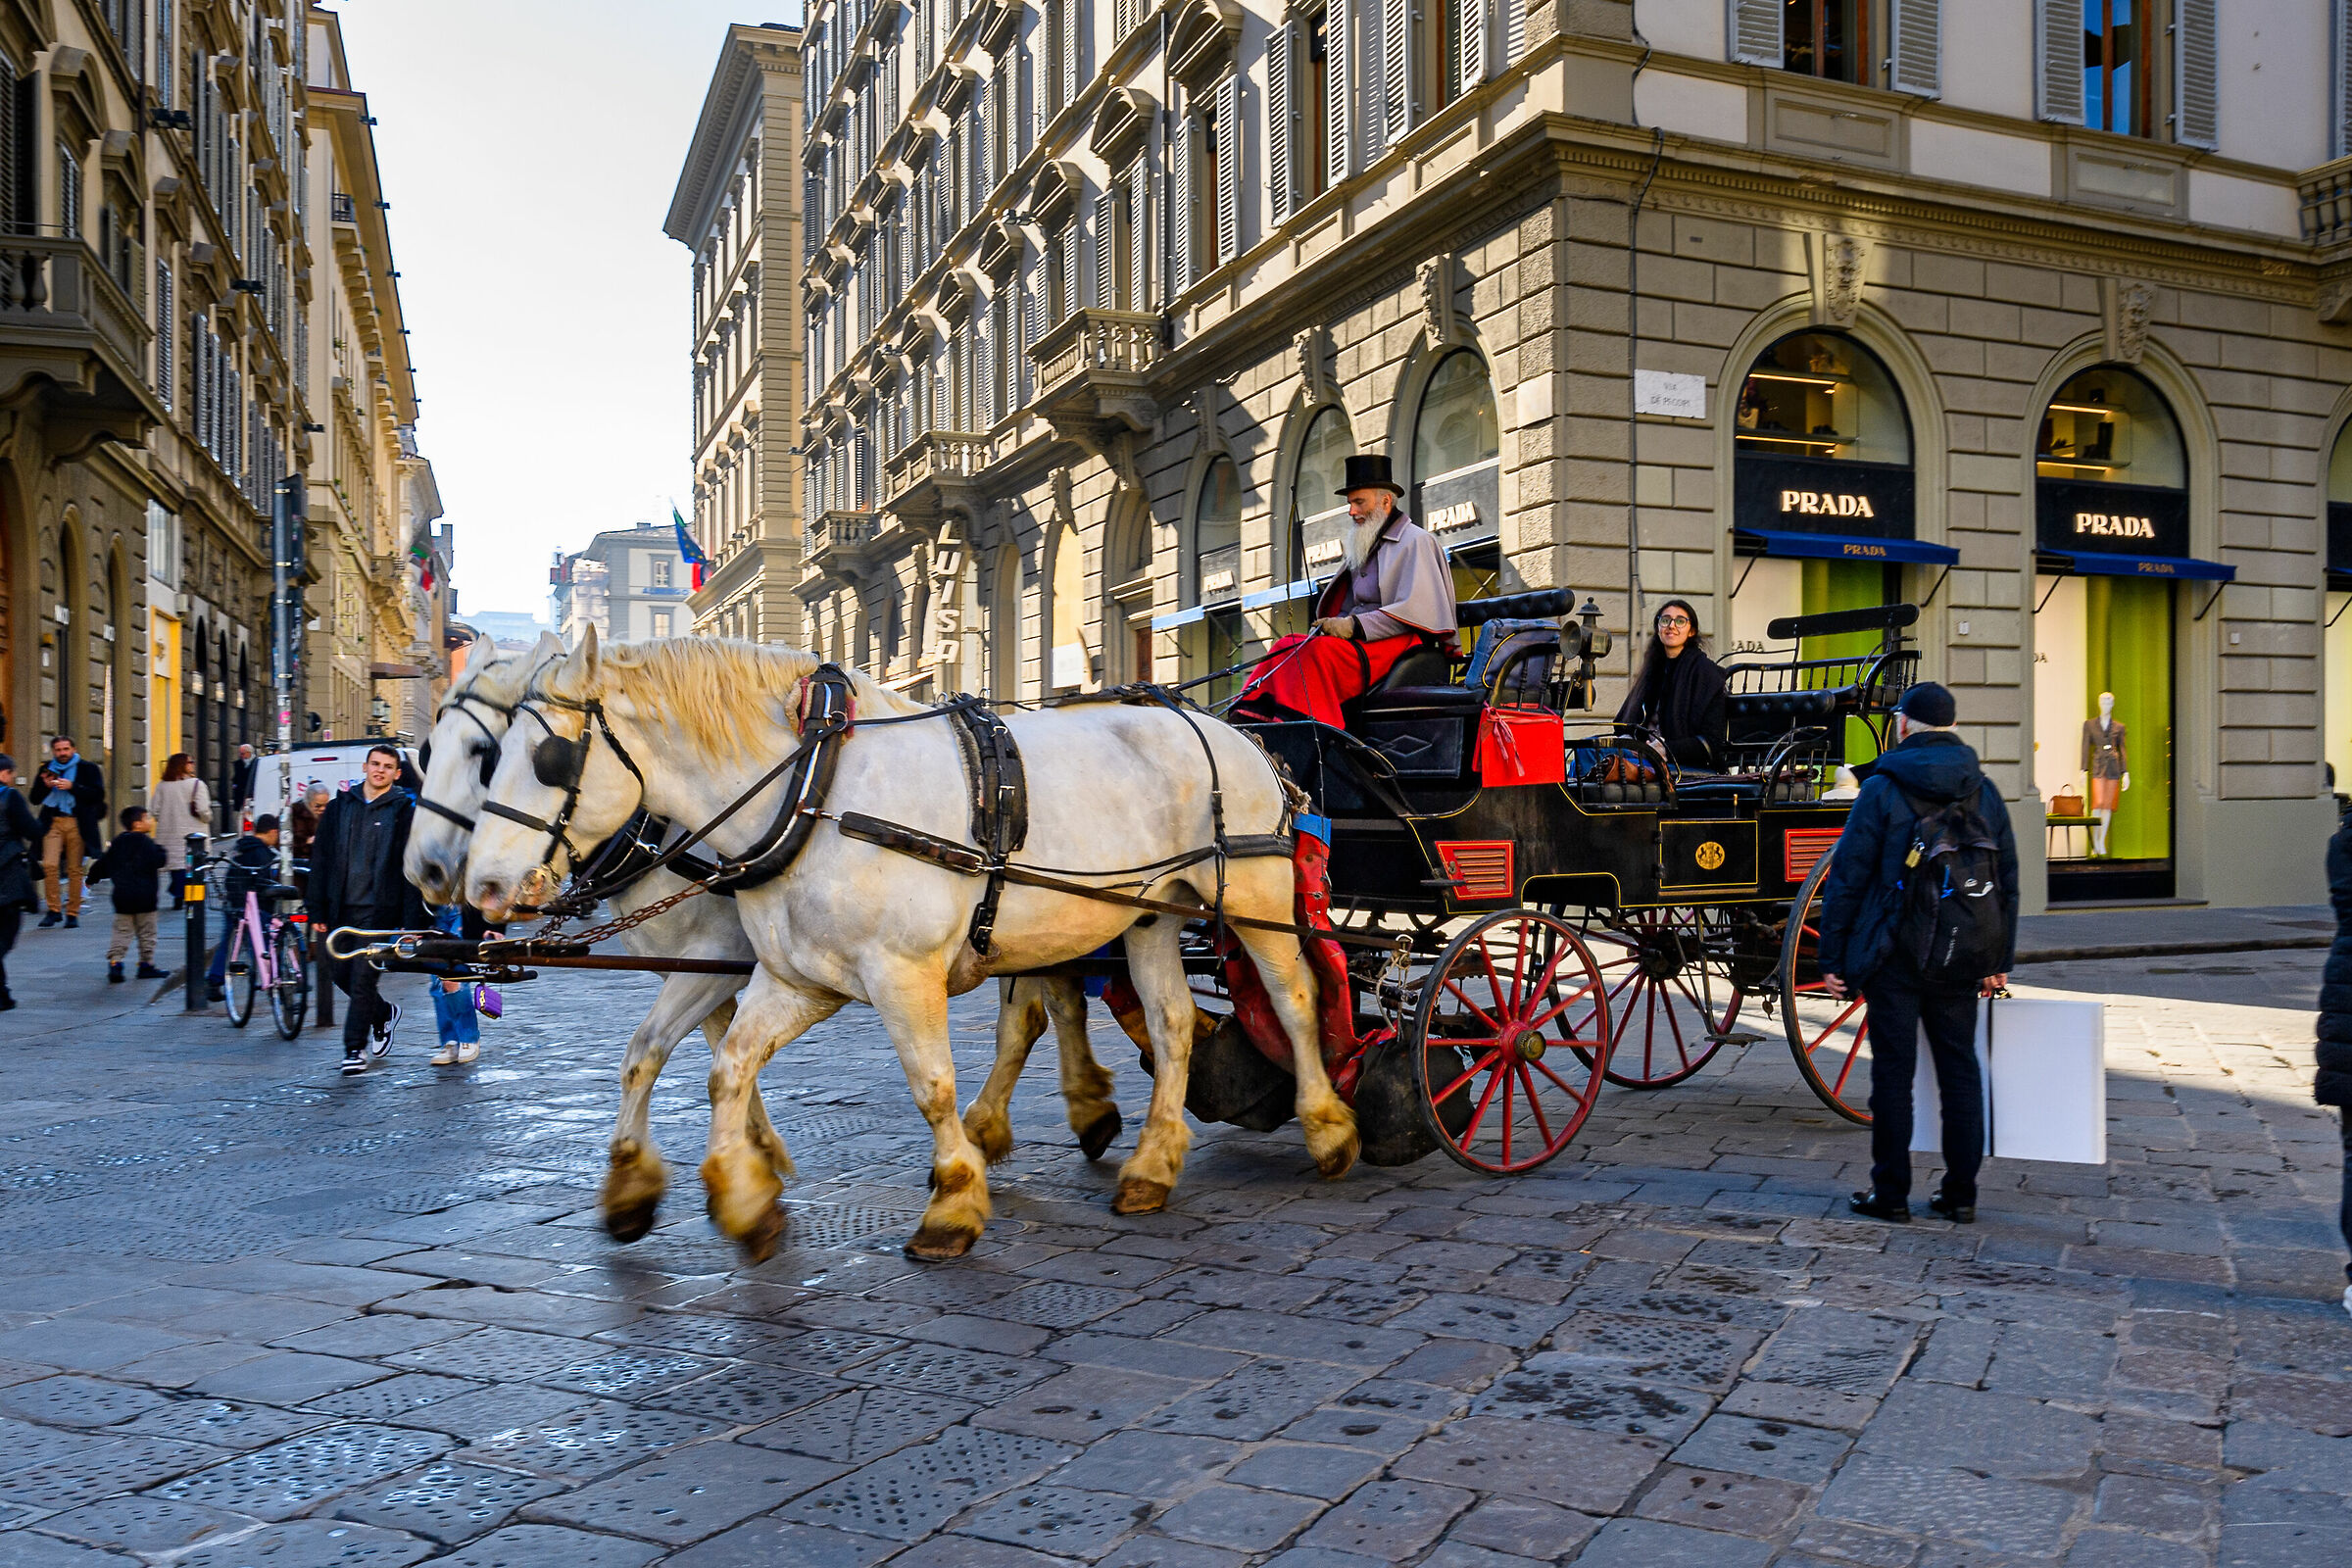 A carriage ride through Florence...